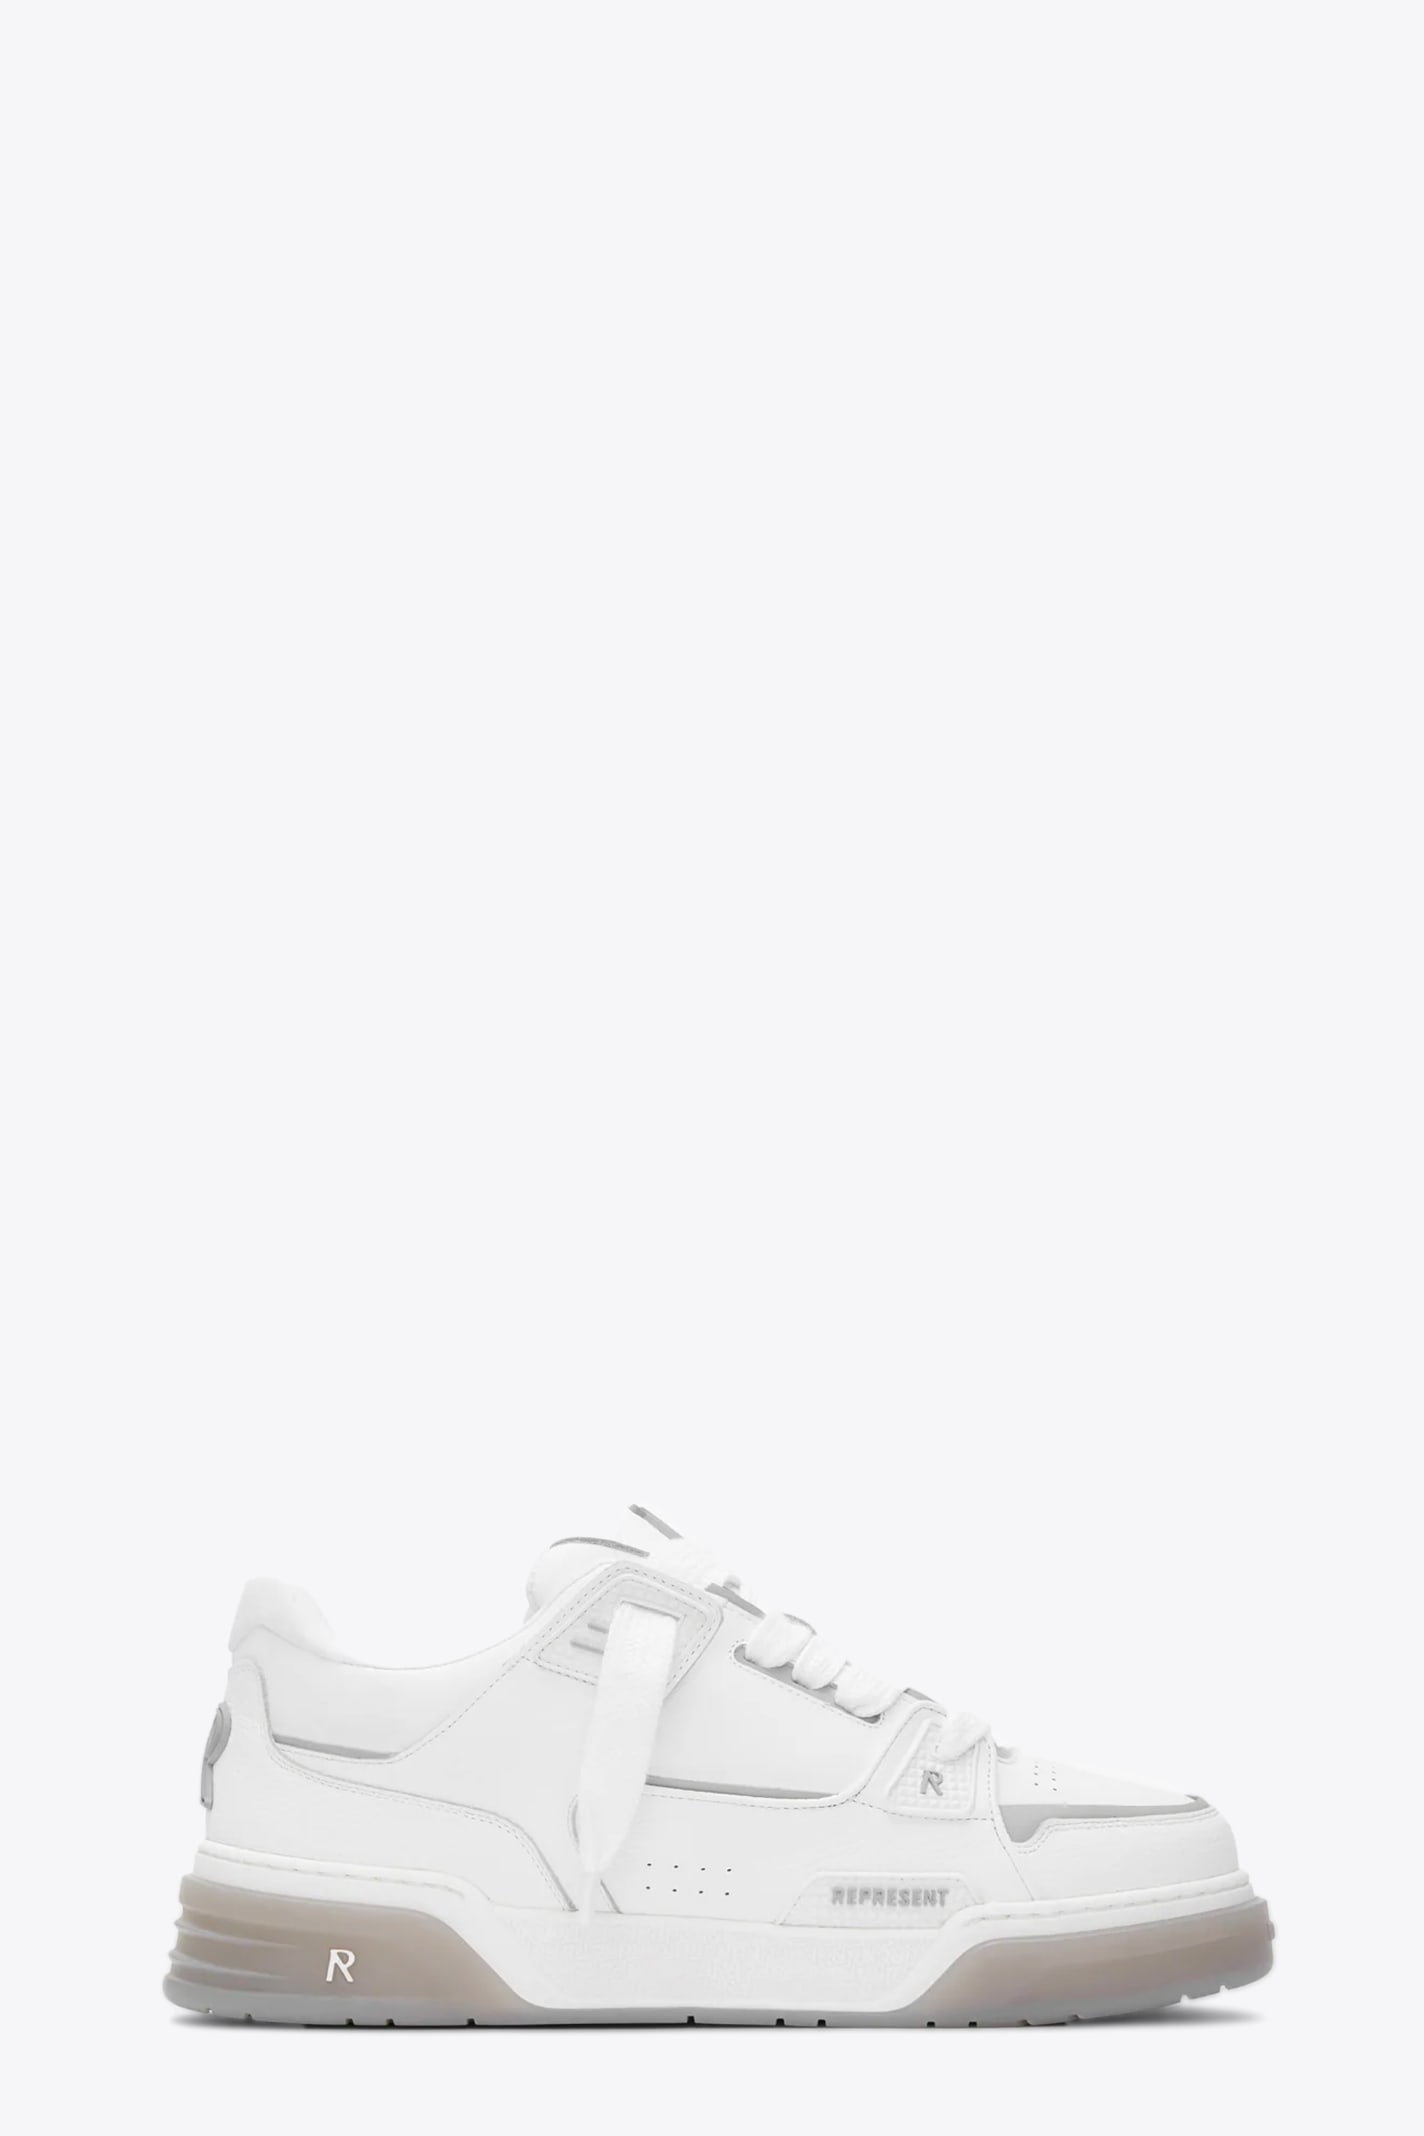 Studio Sneaker White leather low chunky sneaker - Studio sneaker